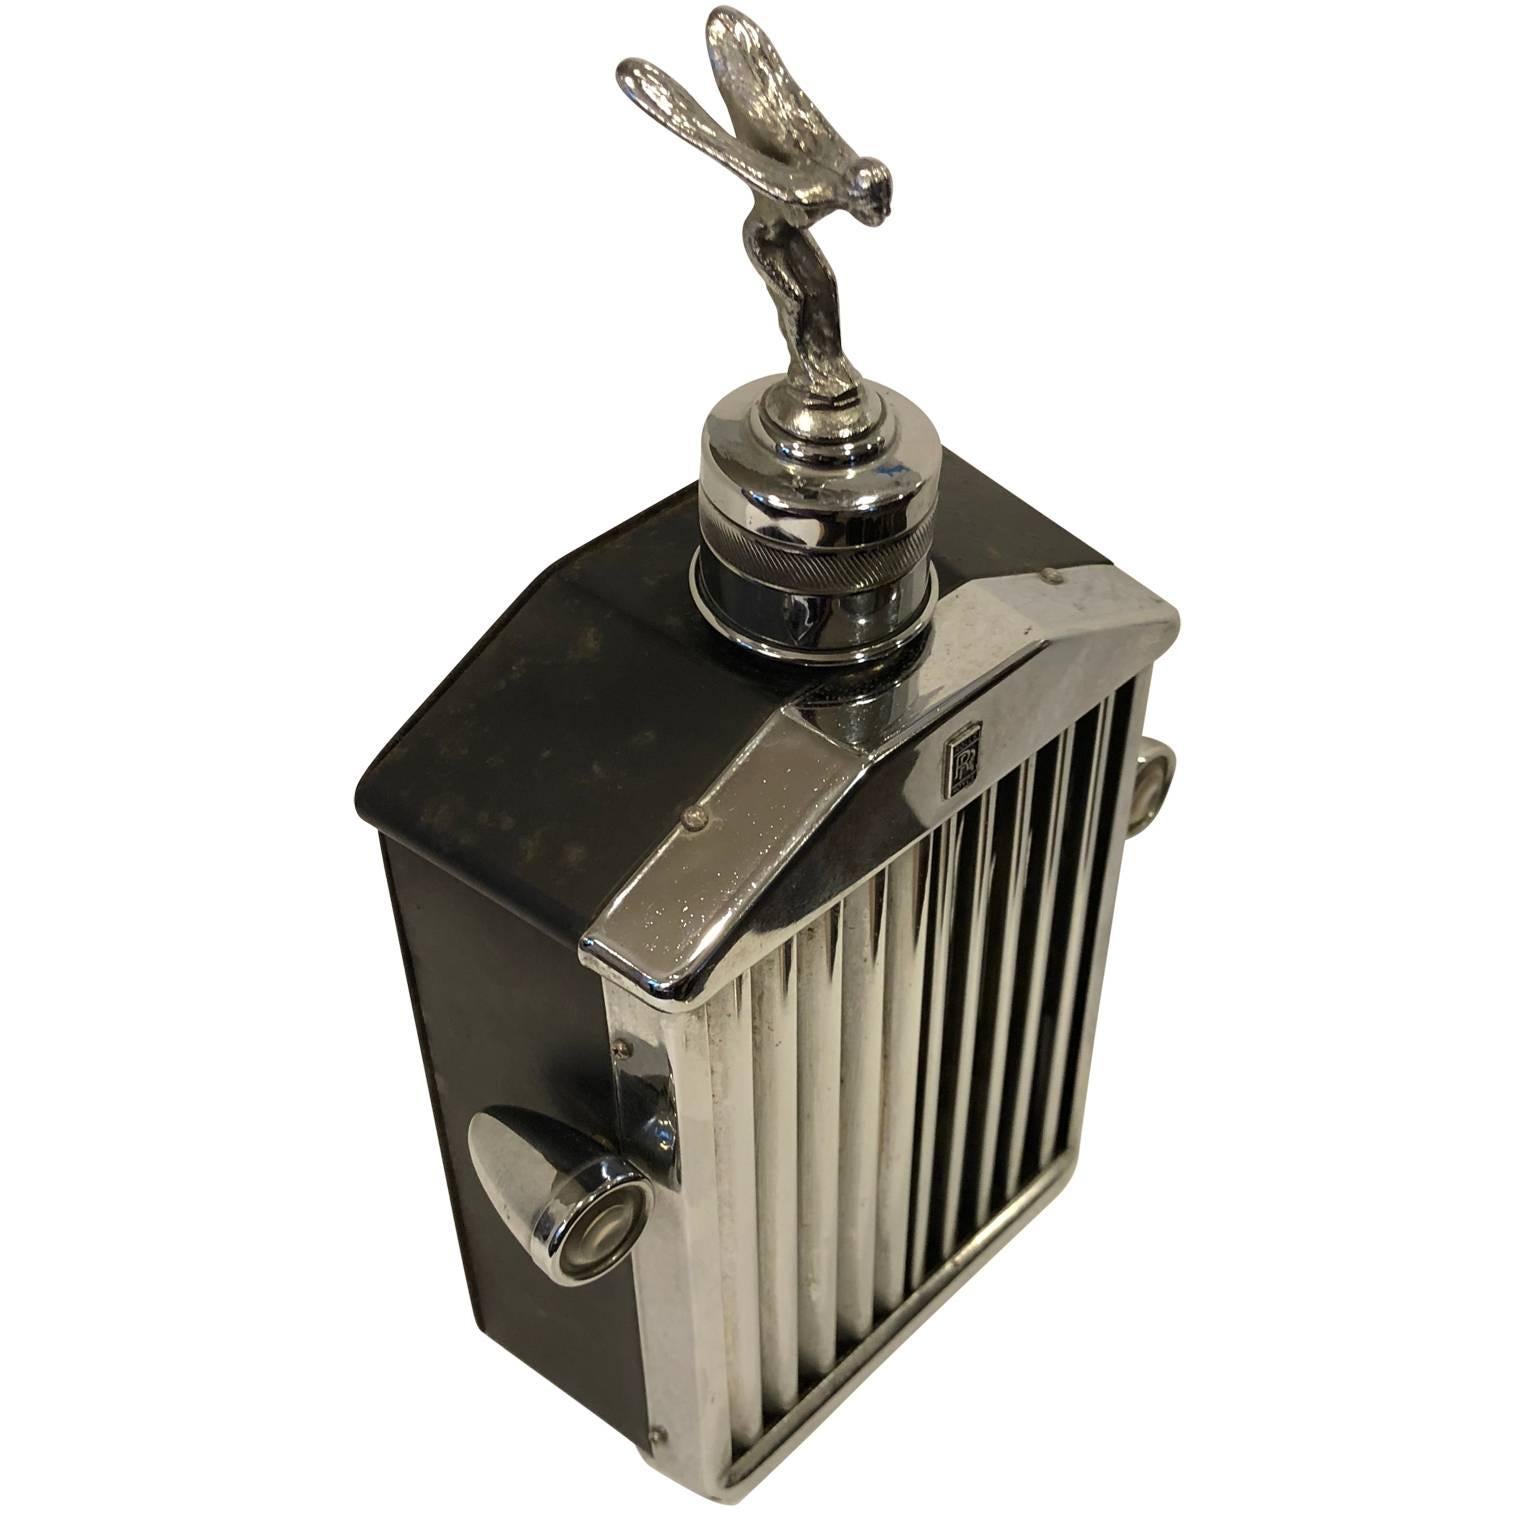 English Vintage Rolls Royce Radiator Flask and Musical Box